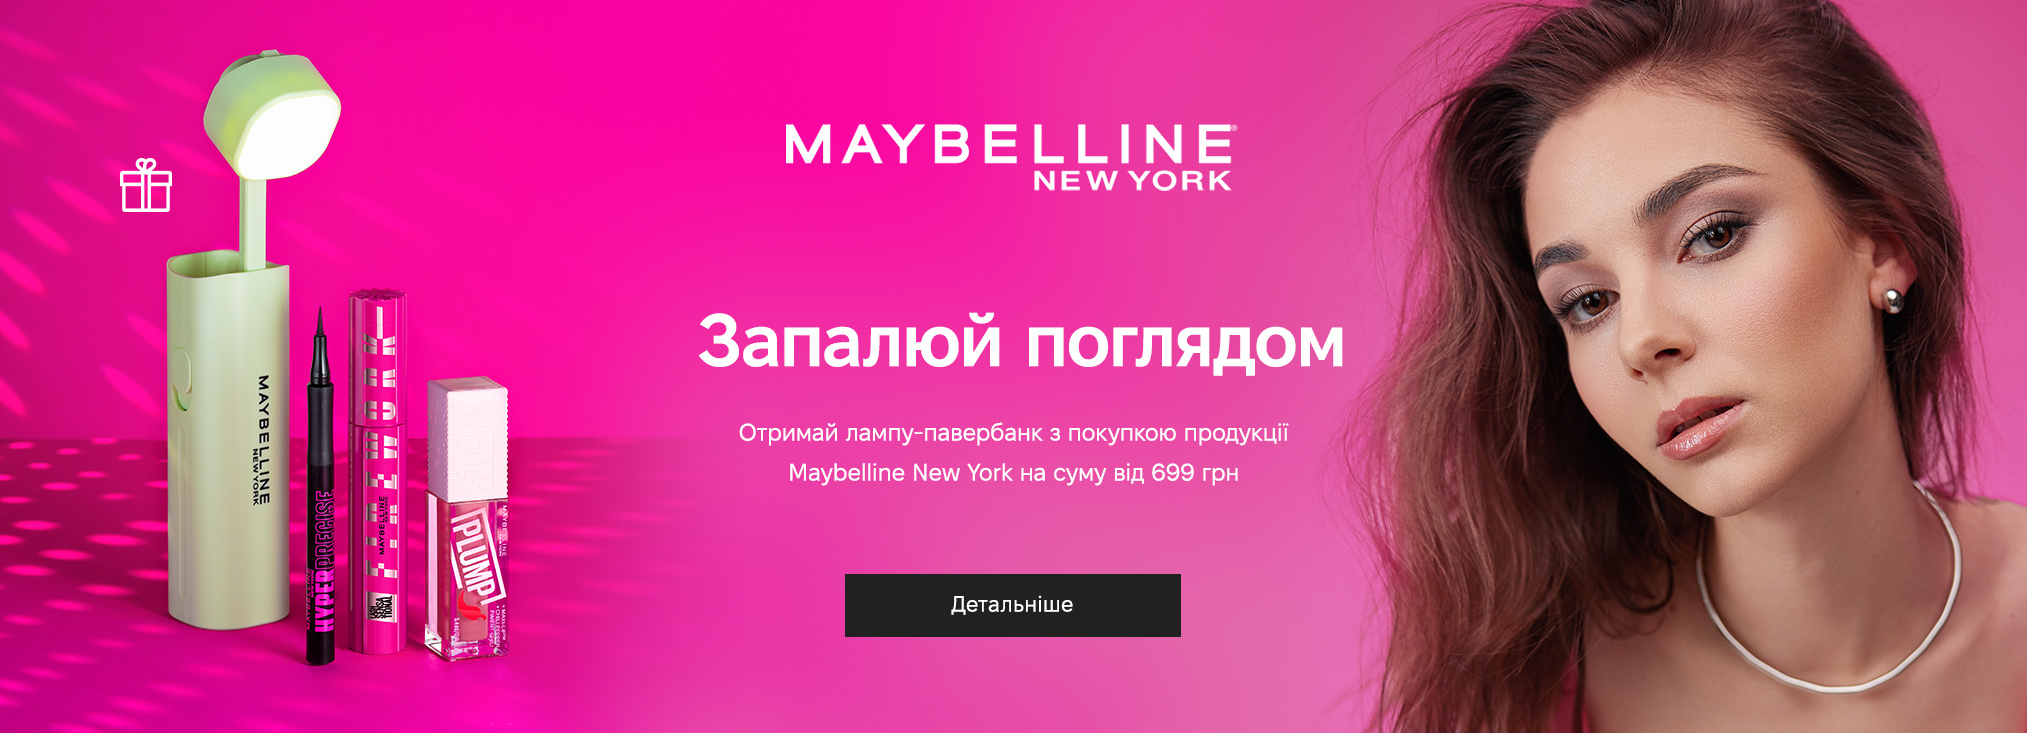 Maybelline New York_2419